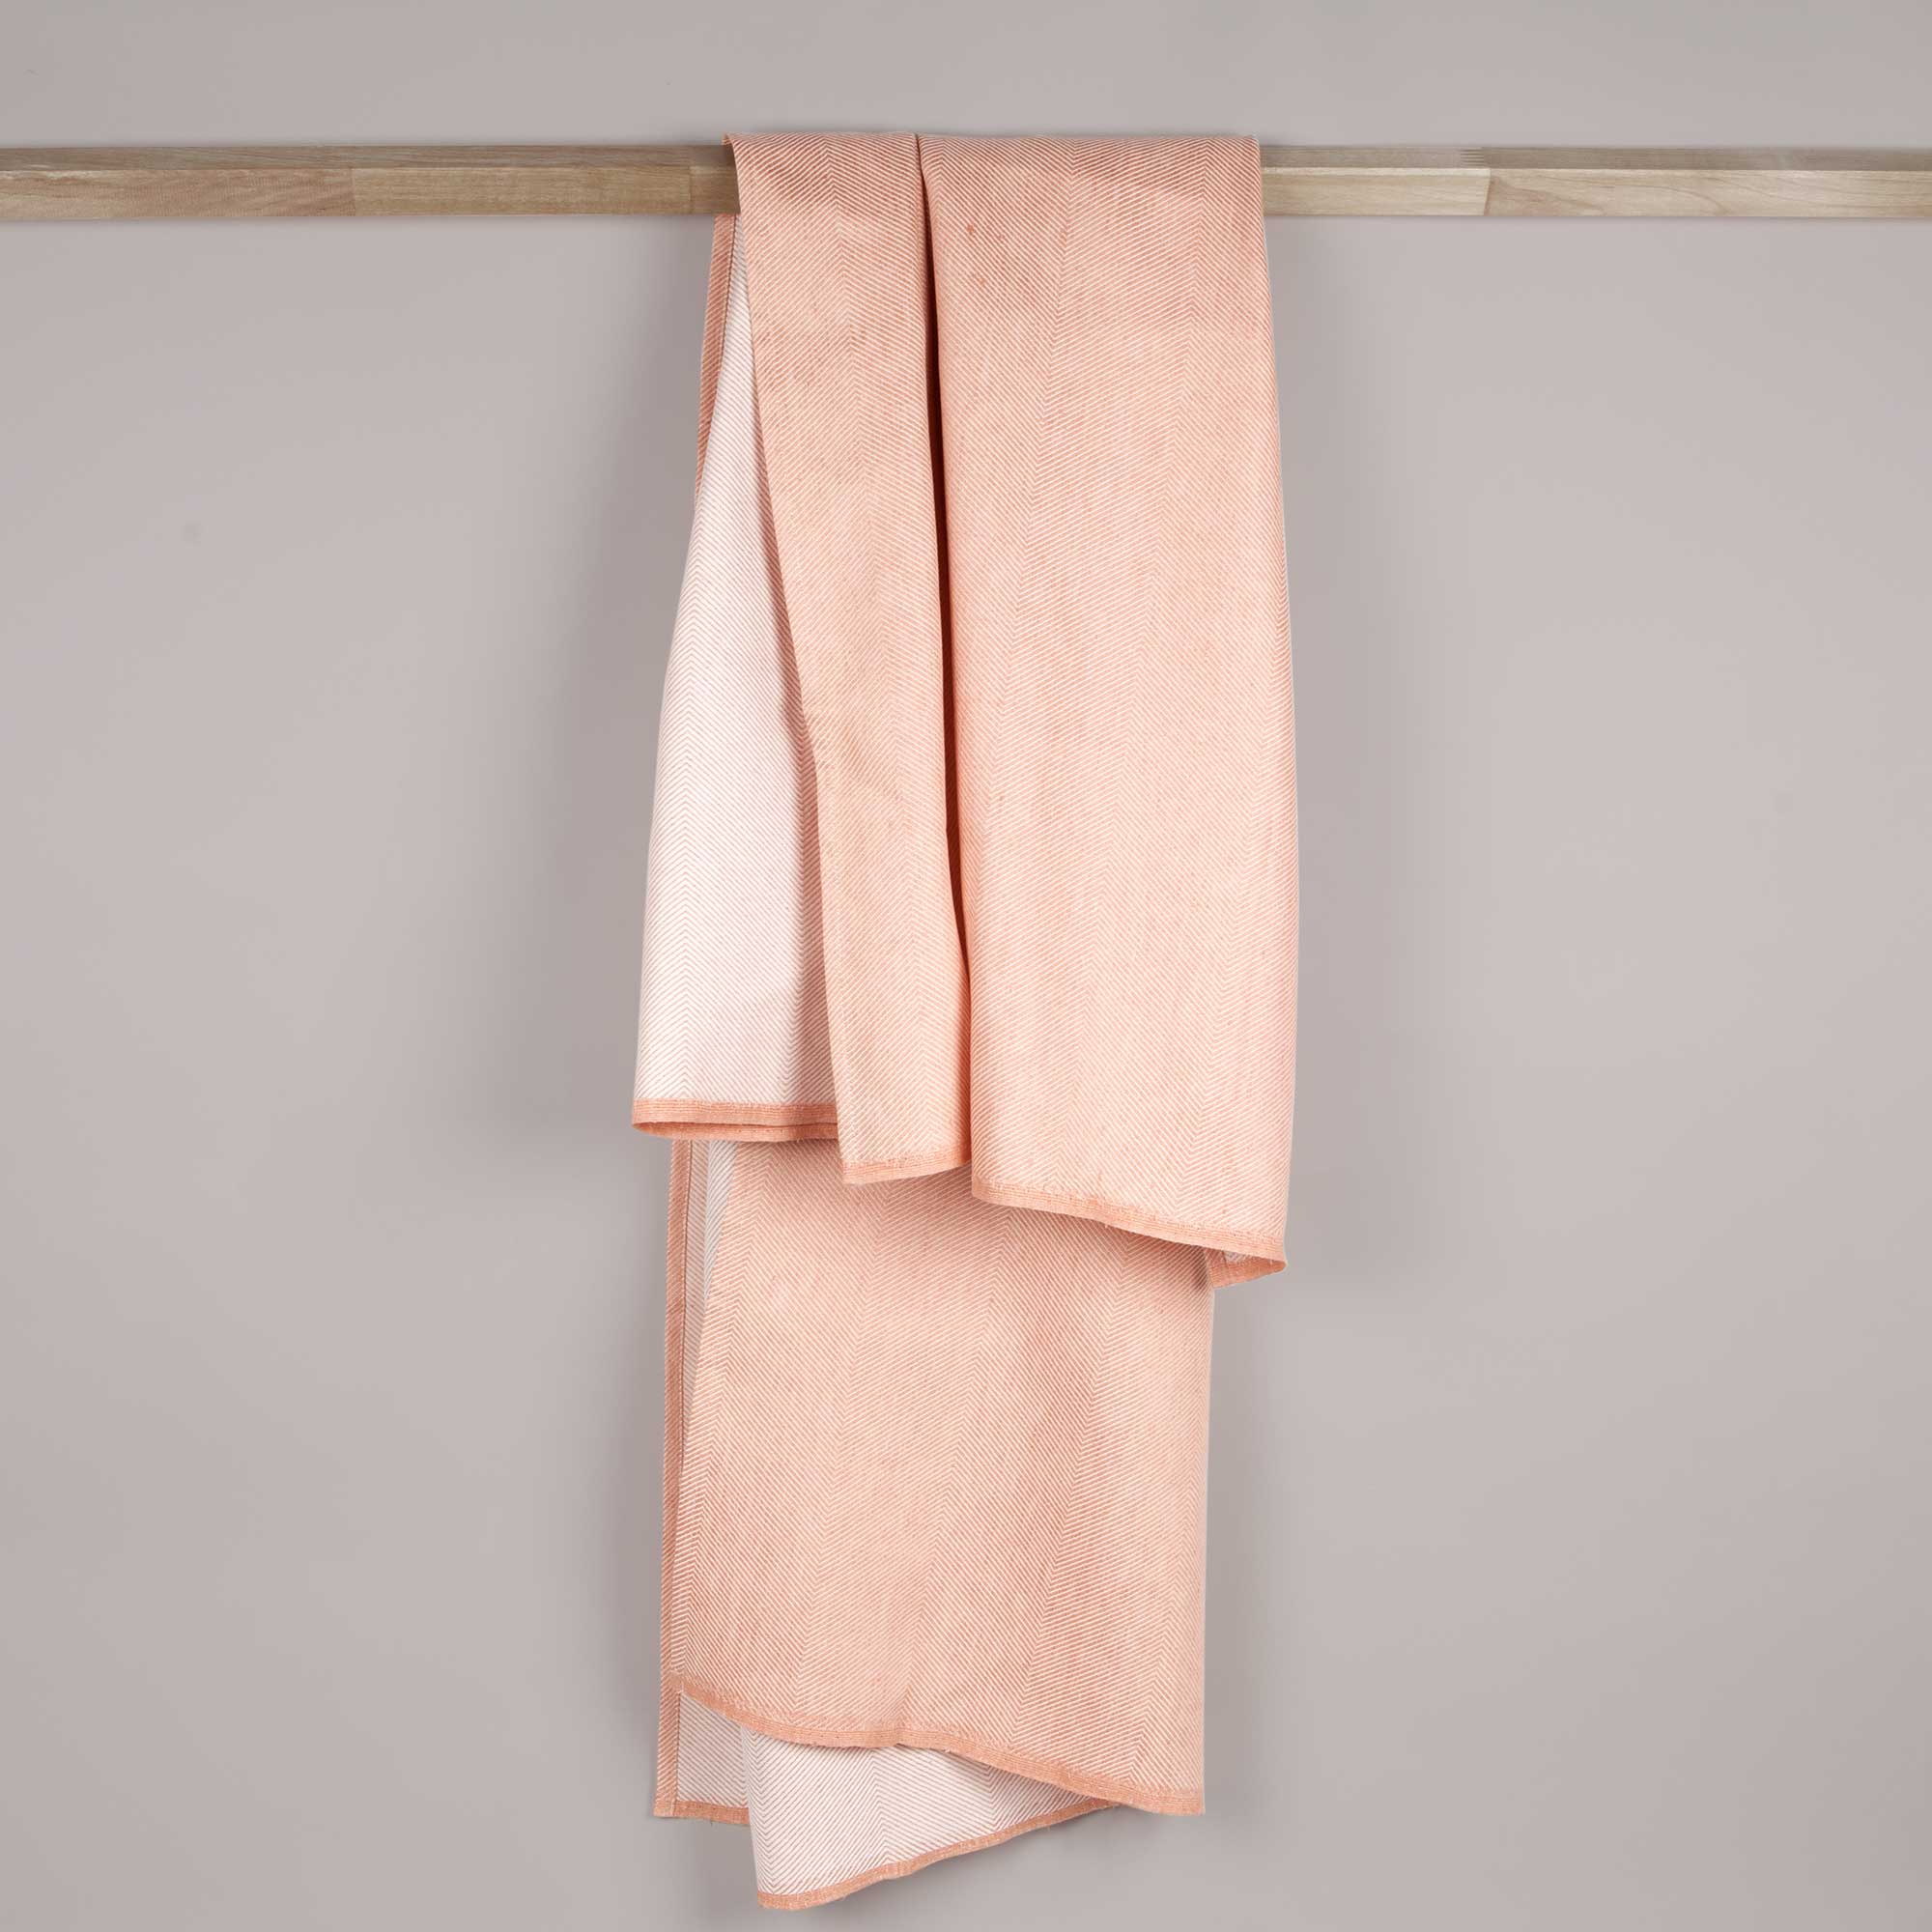 Bath towel, linen/cotton, Dusty coral. Design by Anne Rosenberg, RosenbergCph